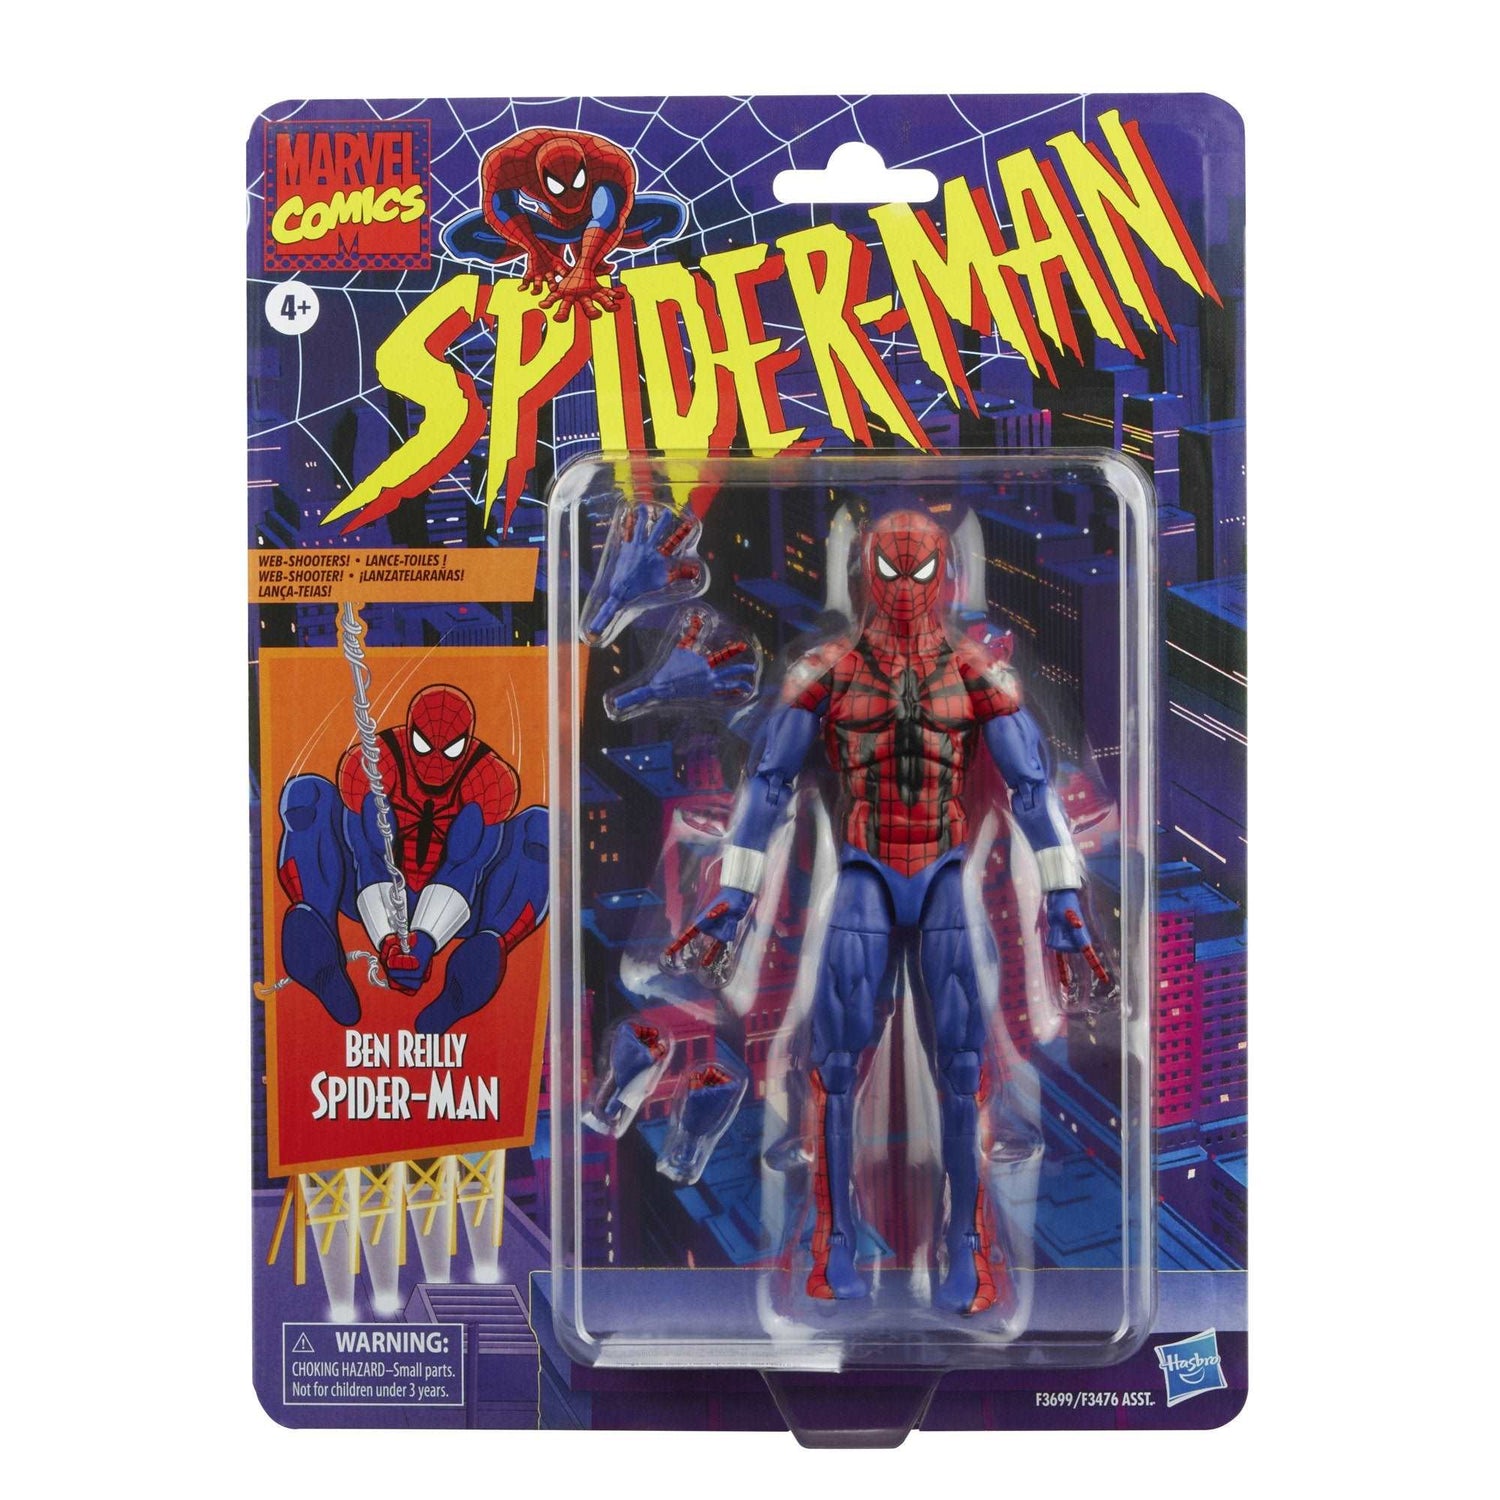 Marvel Legends Series Retro Spider-Man Ben Reilly Figure front of Blister Card